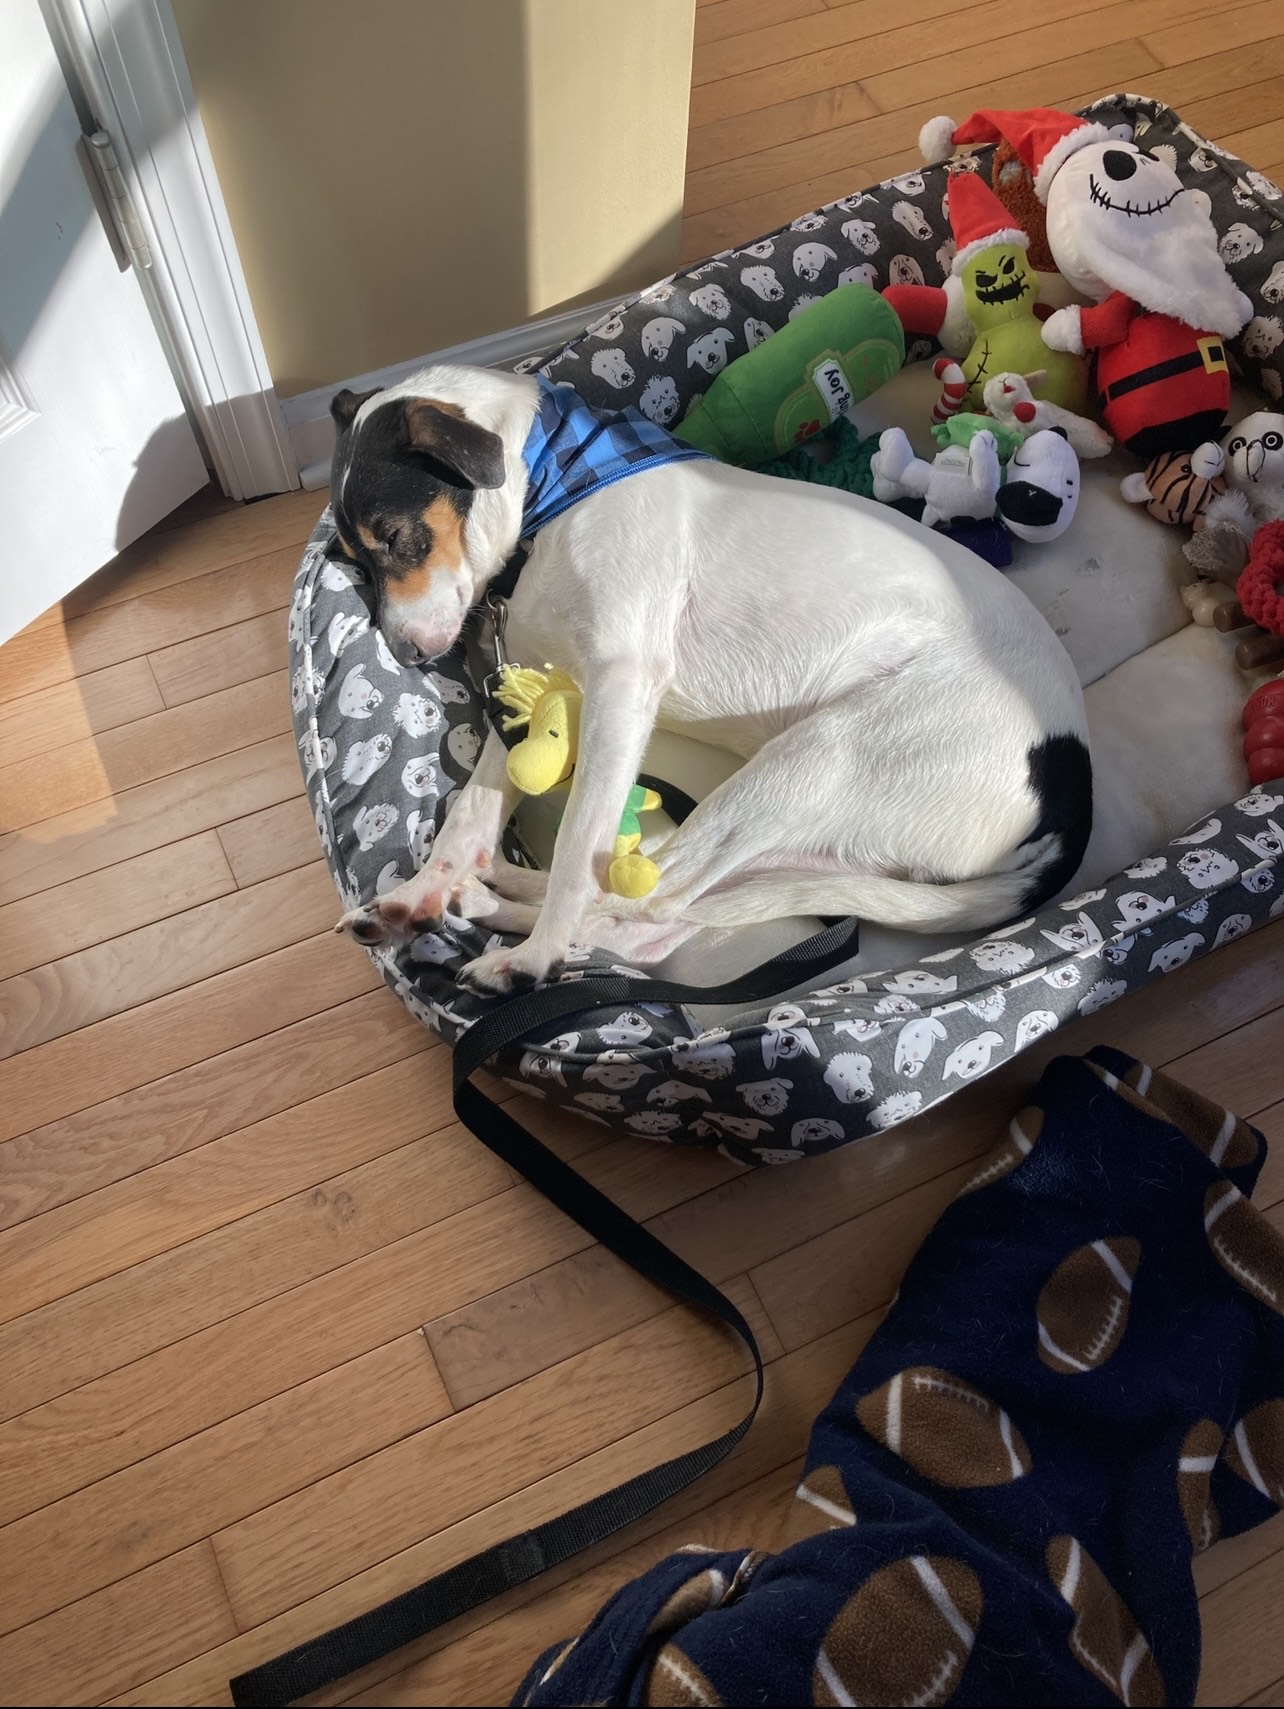 Baja Sleeping with his Toy